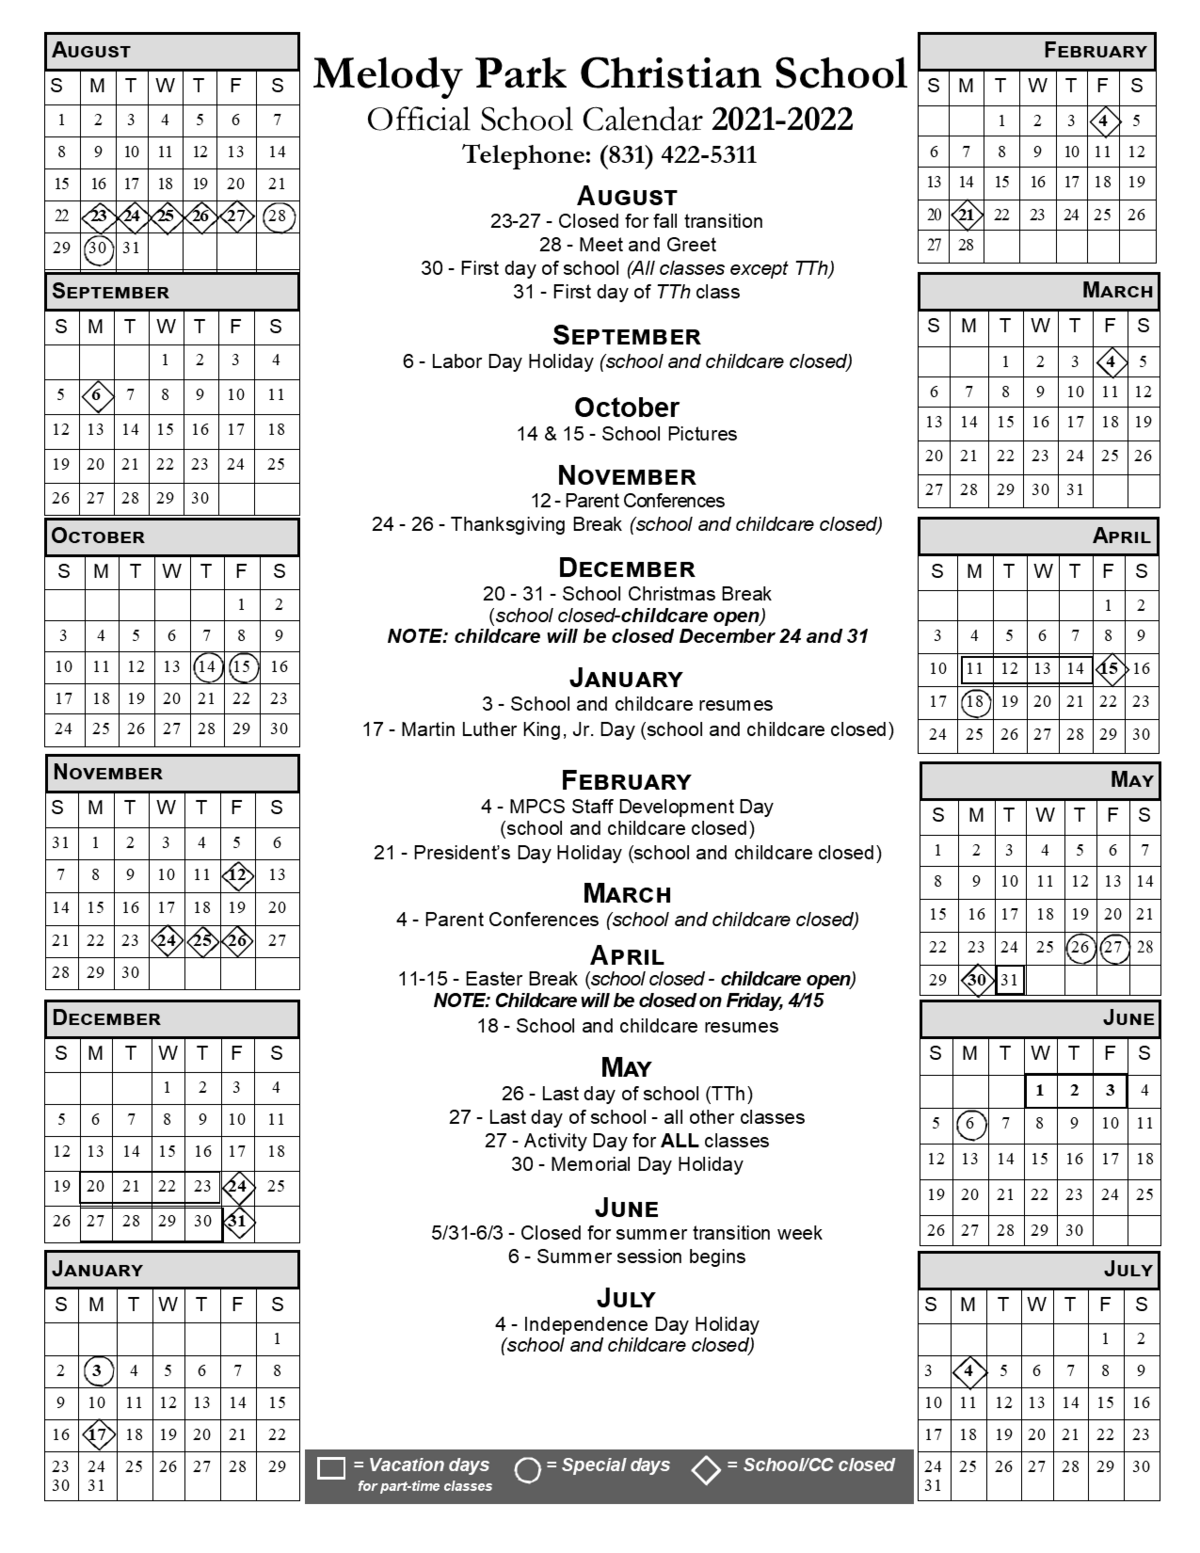 21-22 School Calendar